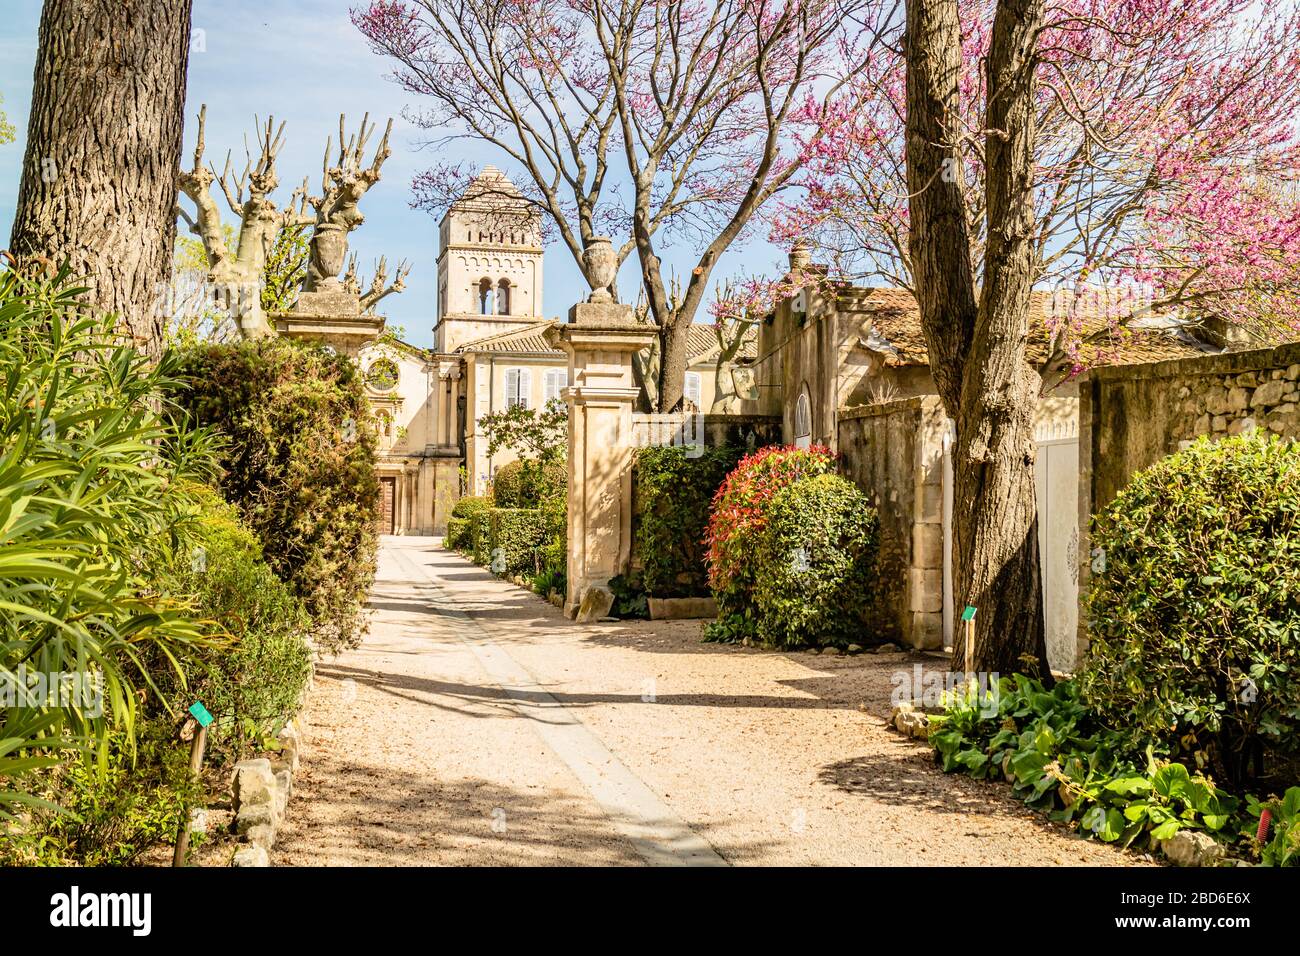 The Saint-Paul asylum where artist Vincent Van Gogh produced some of his most famous works, Saint-Rémy-de-Provence, France. Spring 2017. Stock Photo